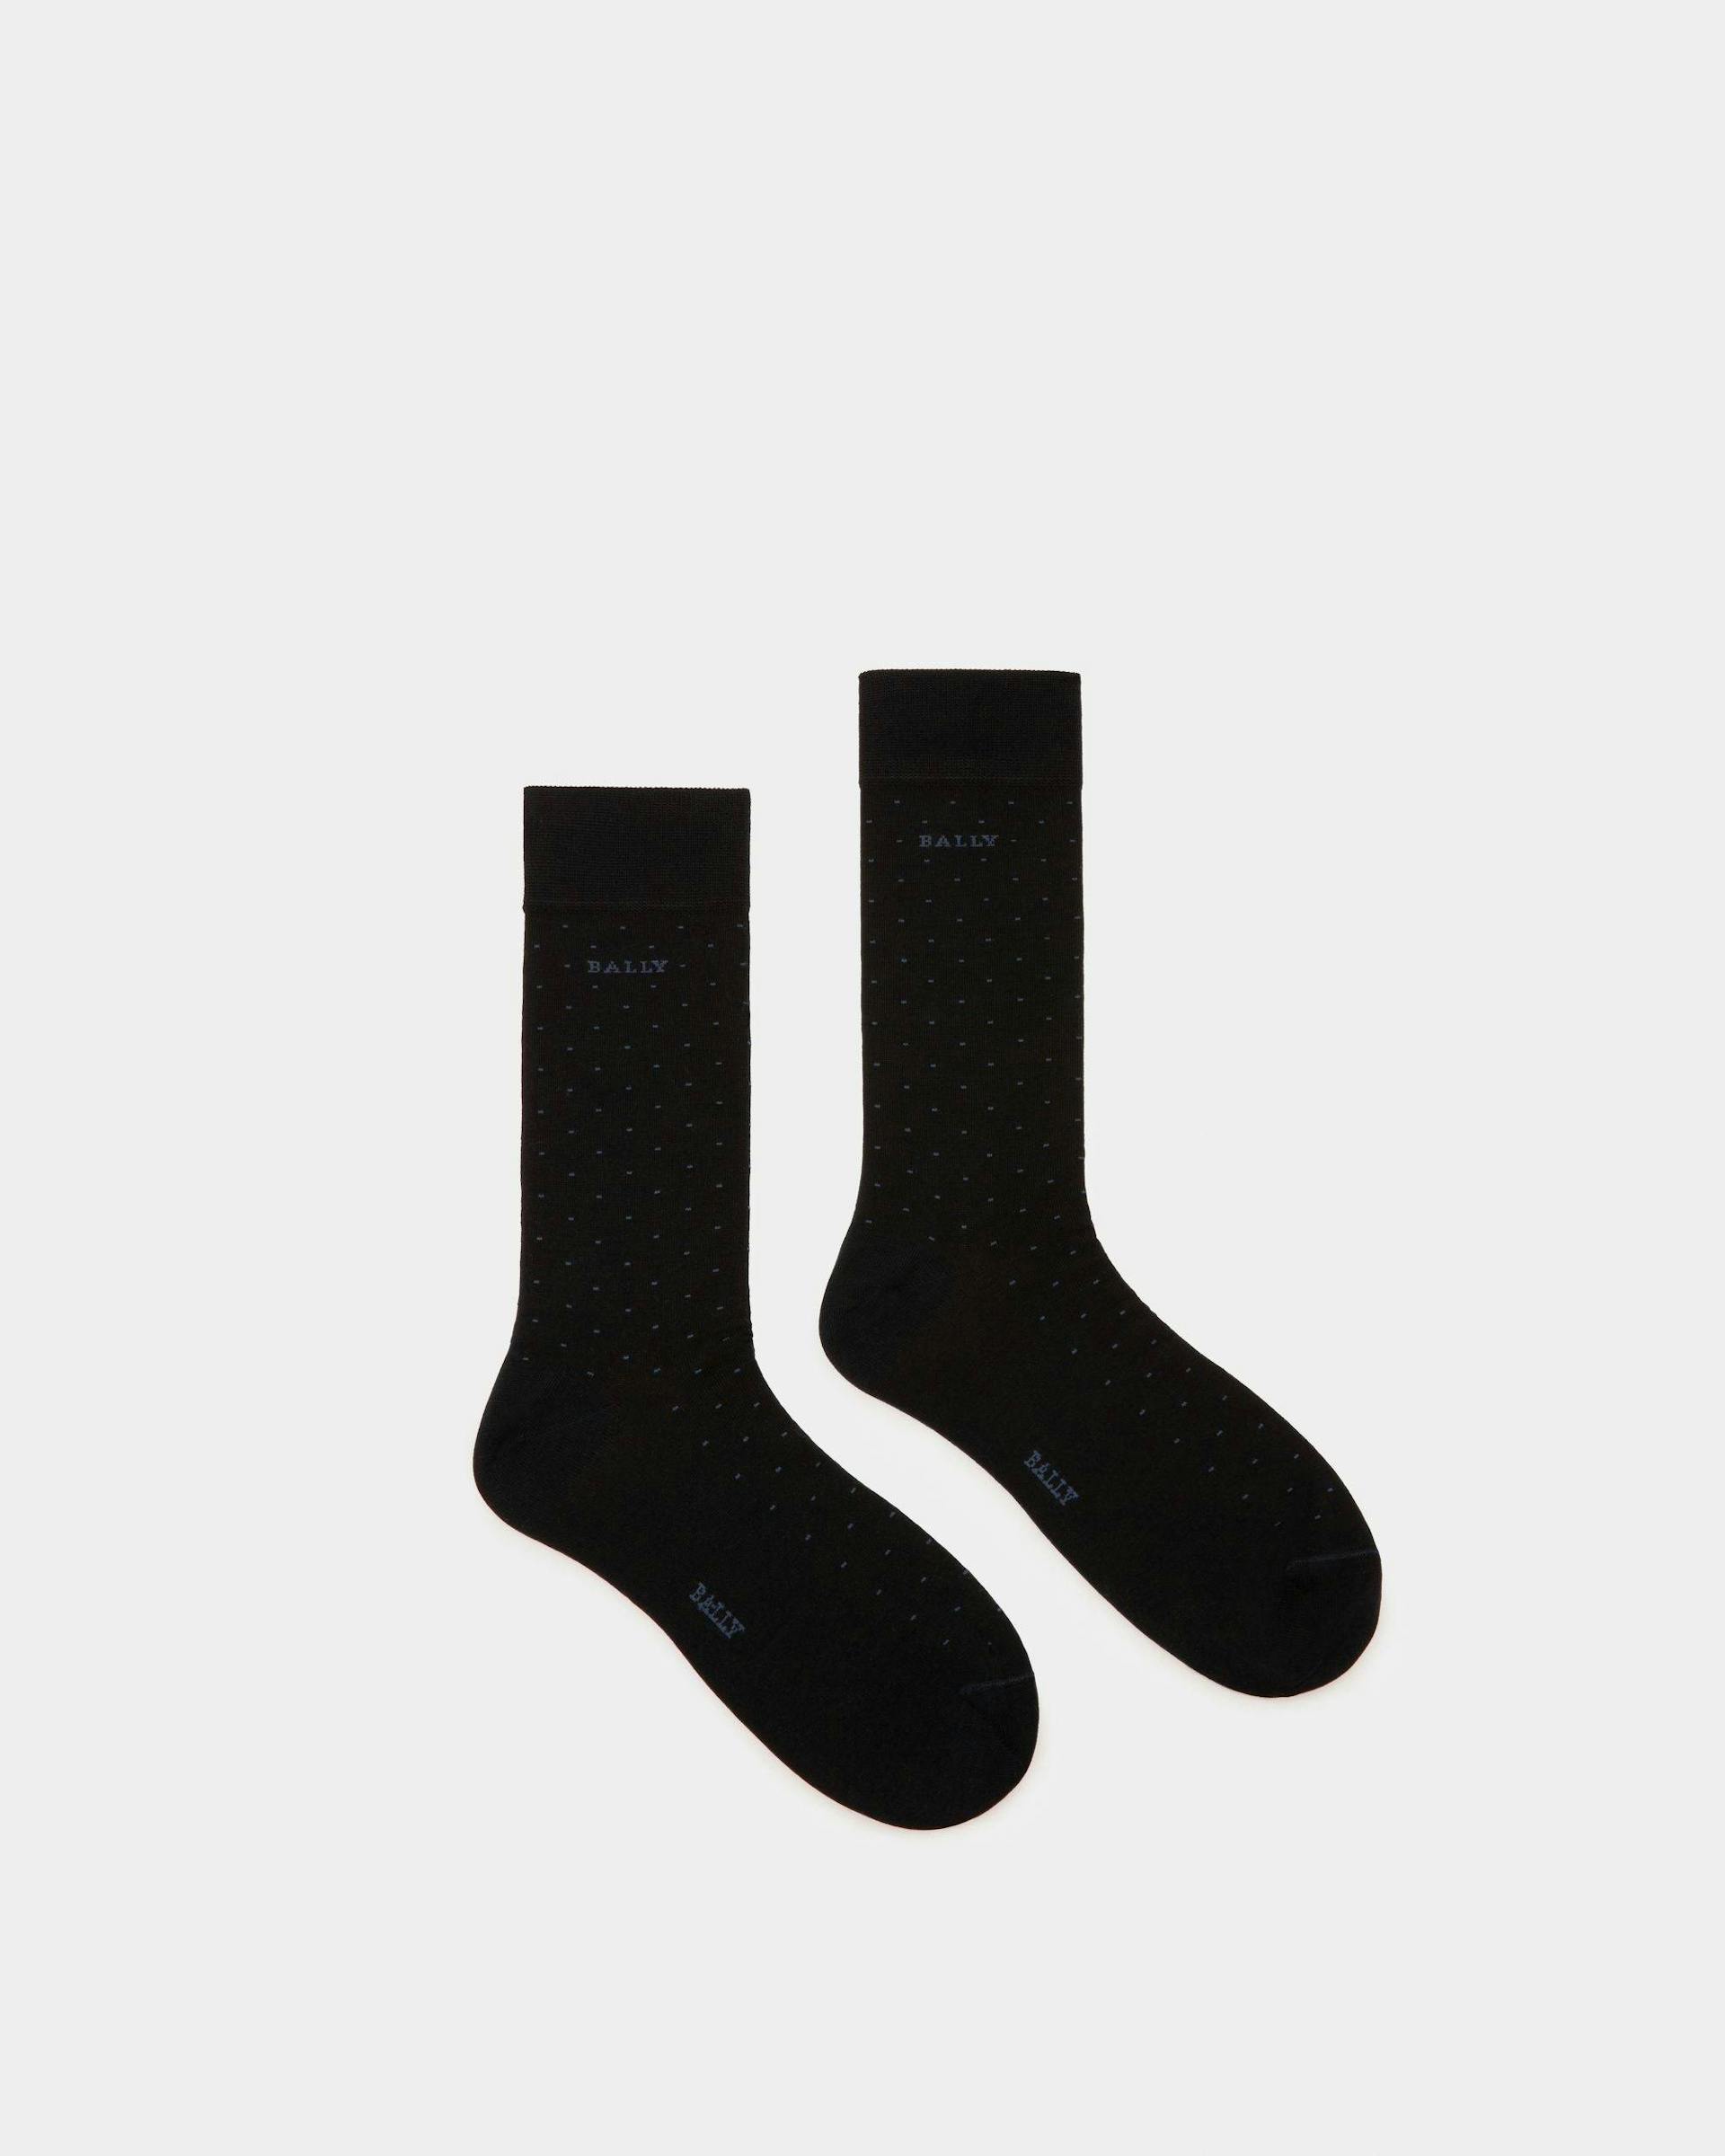 Cotton Mix Socks In Navy & Indigo - Men's - Bally - 01